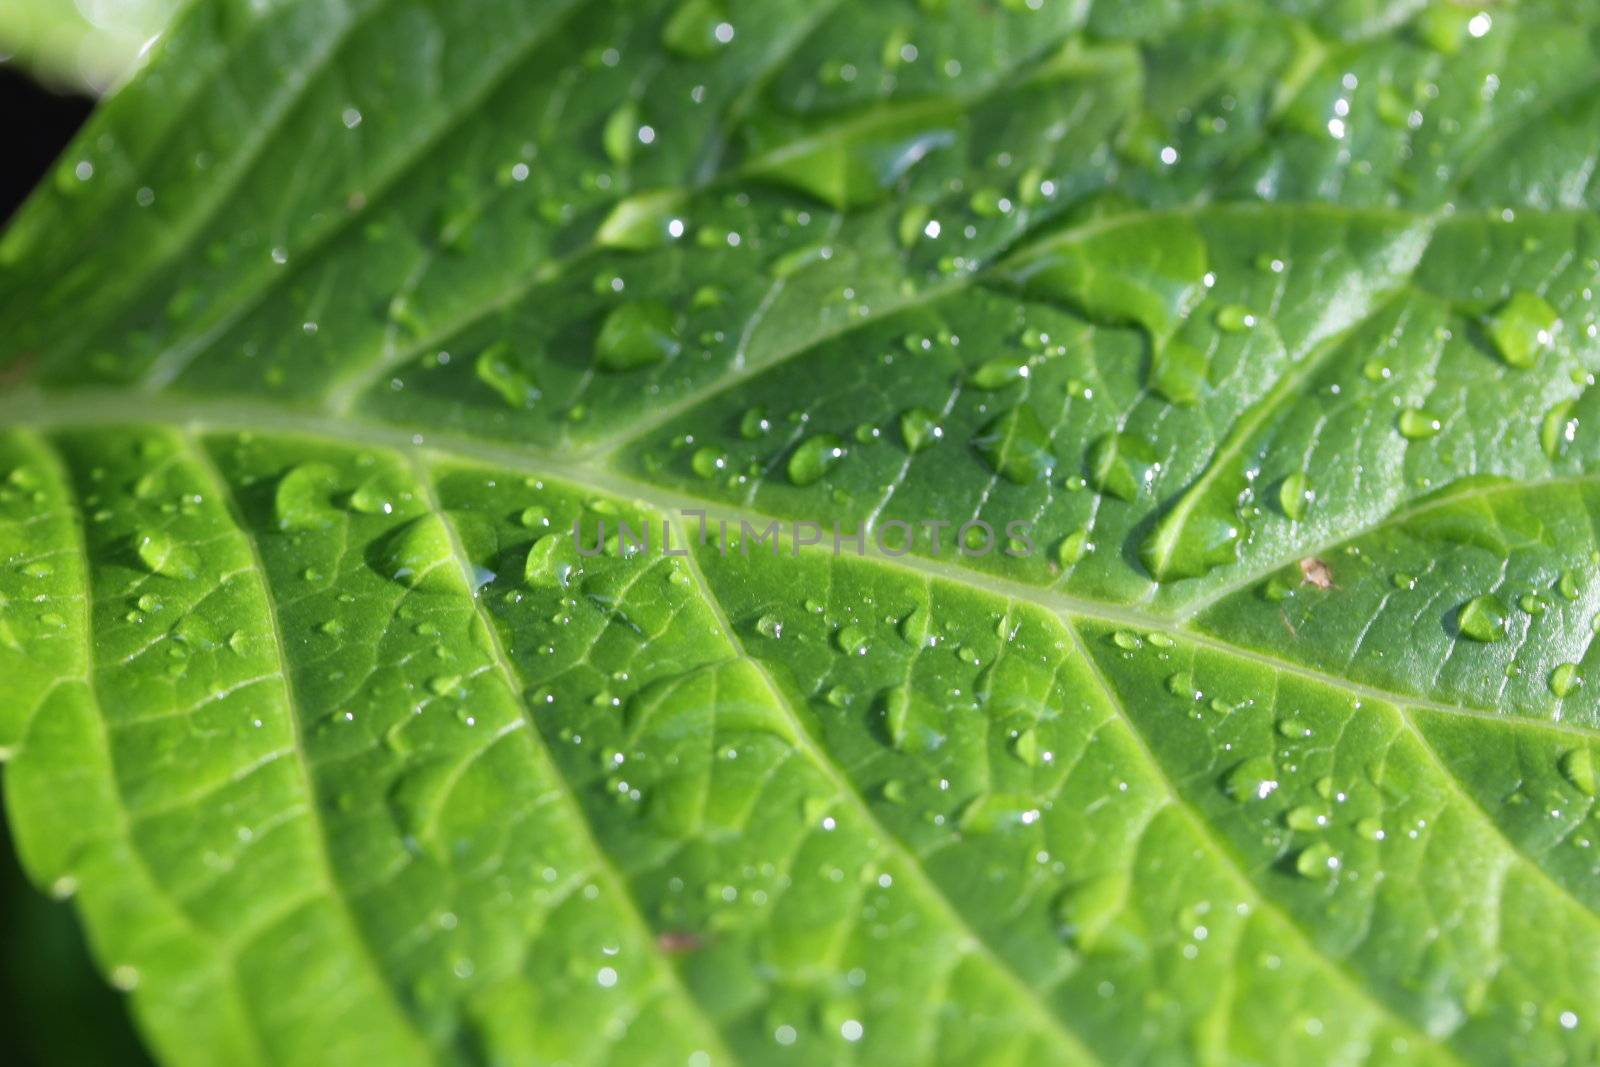 rain drops on green leafe by Teka77